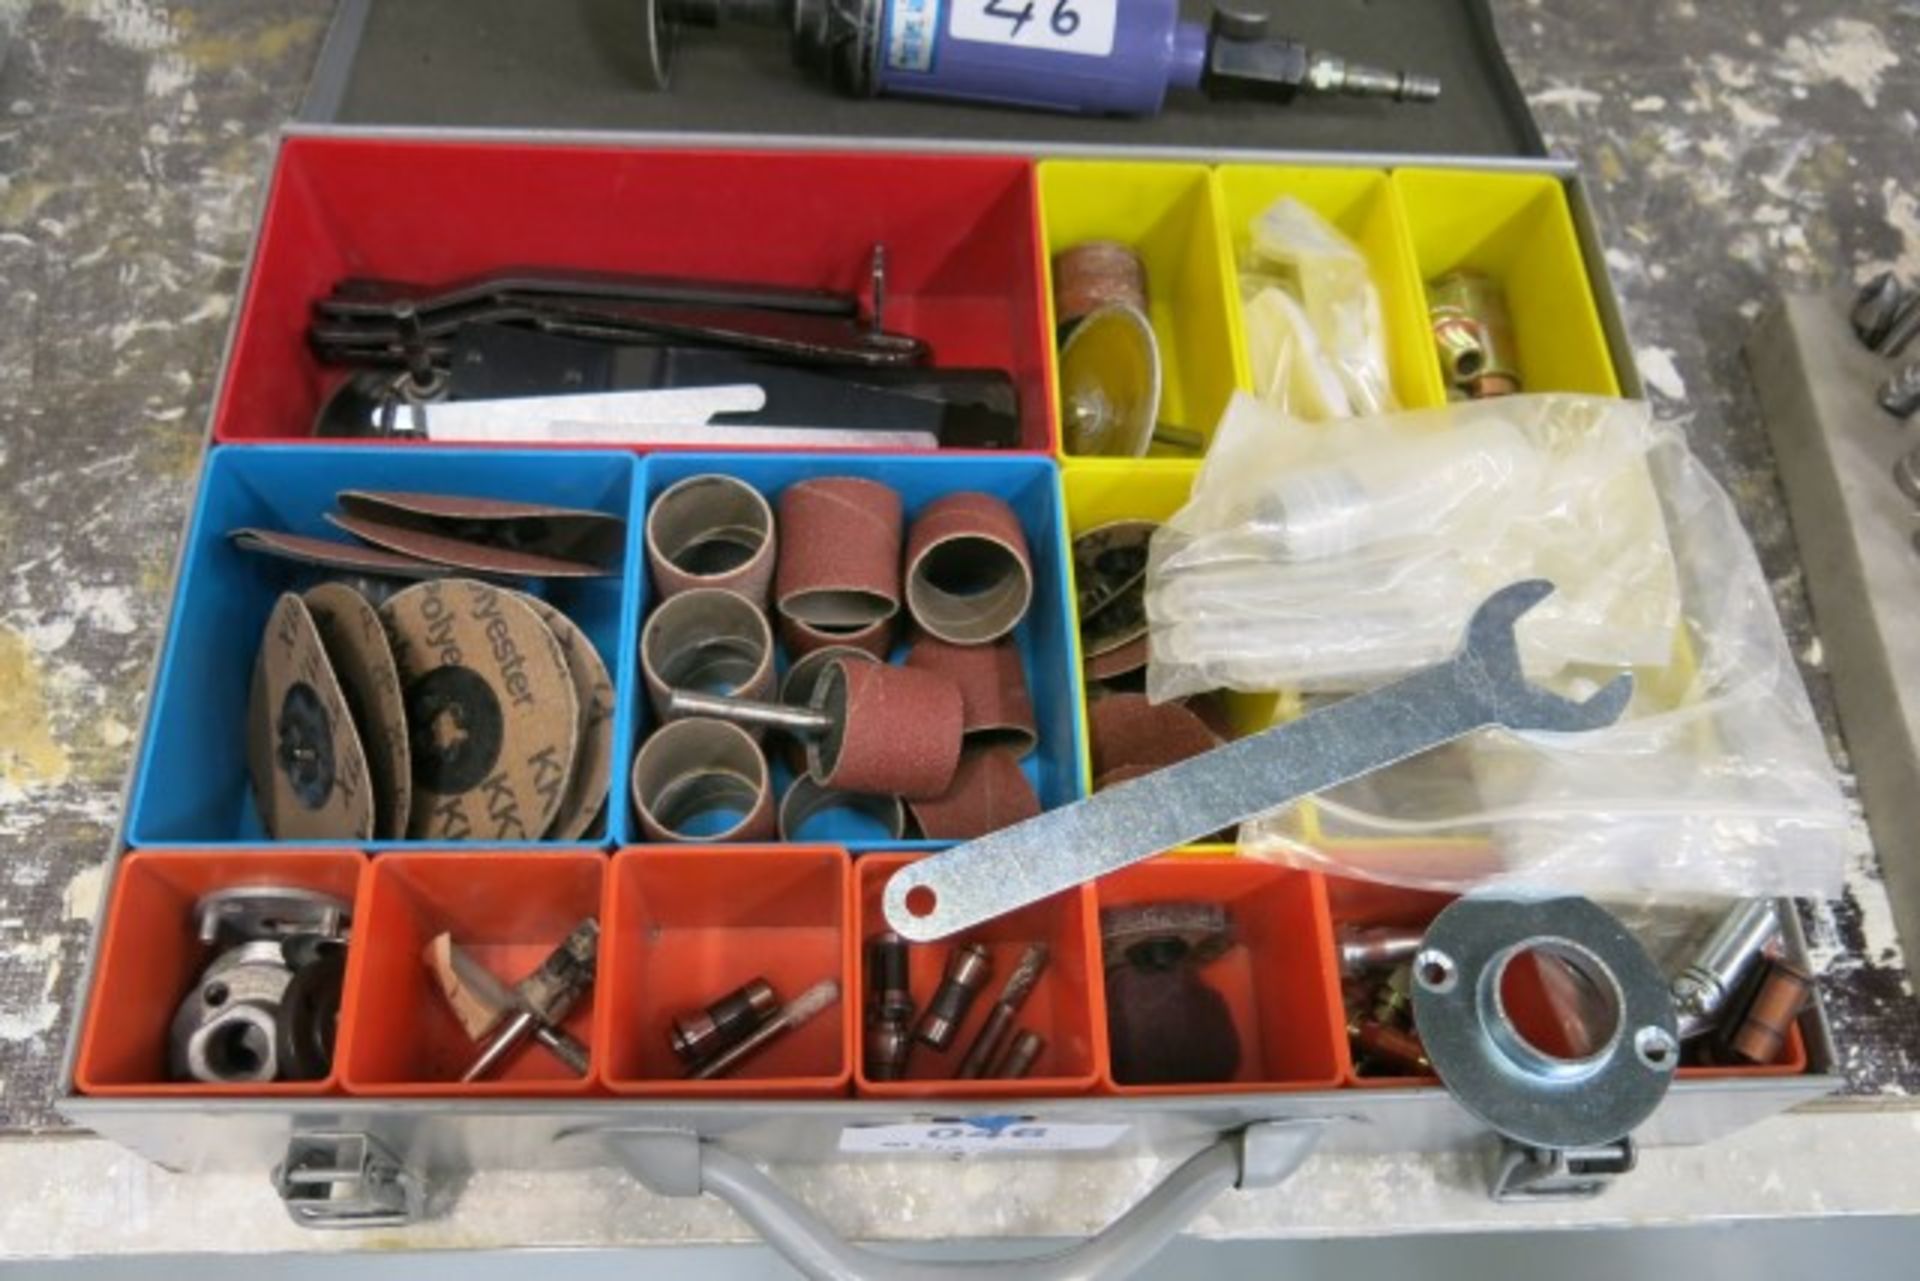 Air die grinder and box of accessories - Image 3 of 3